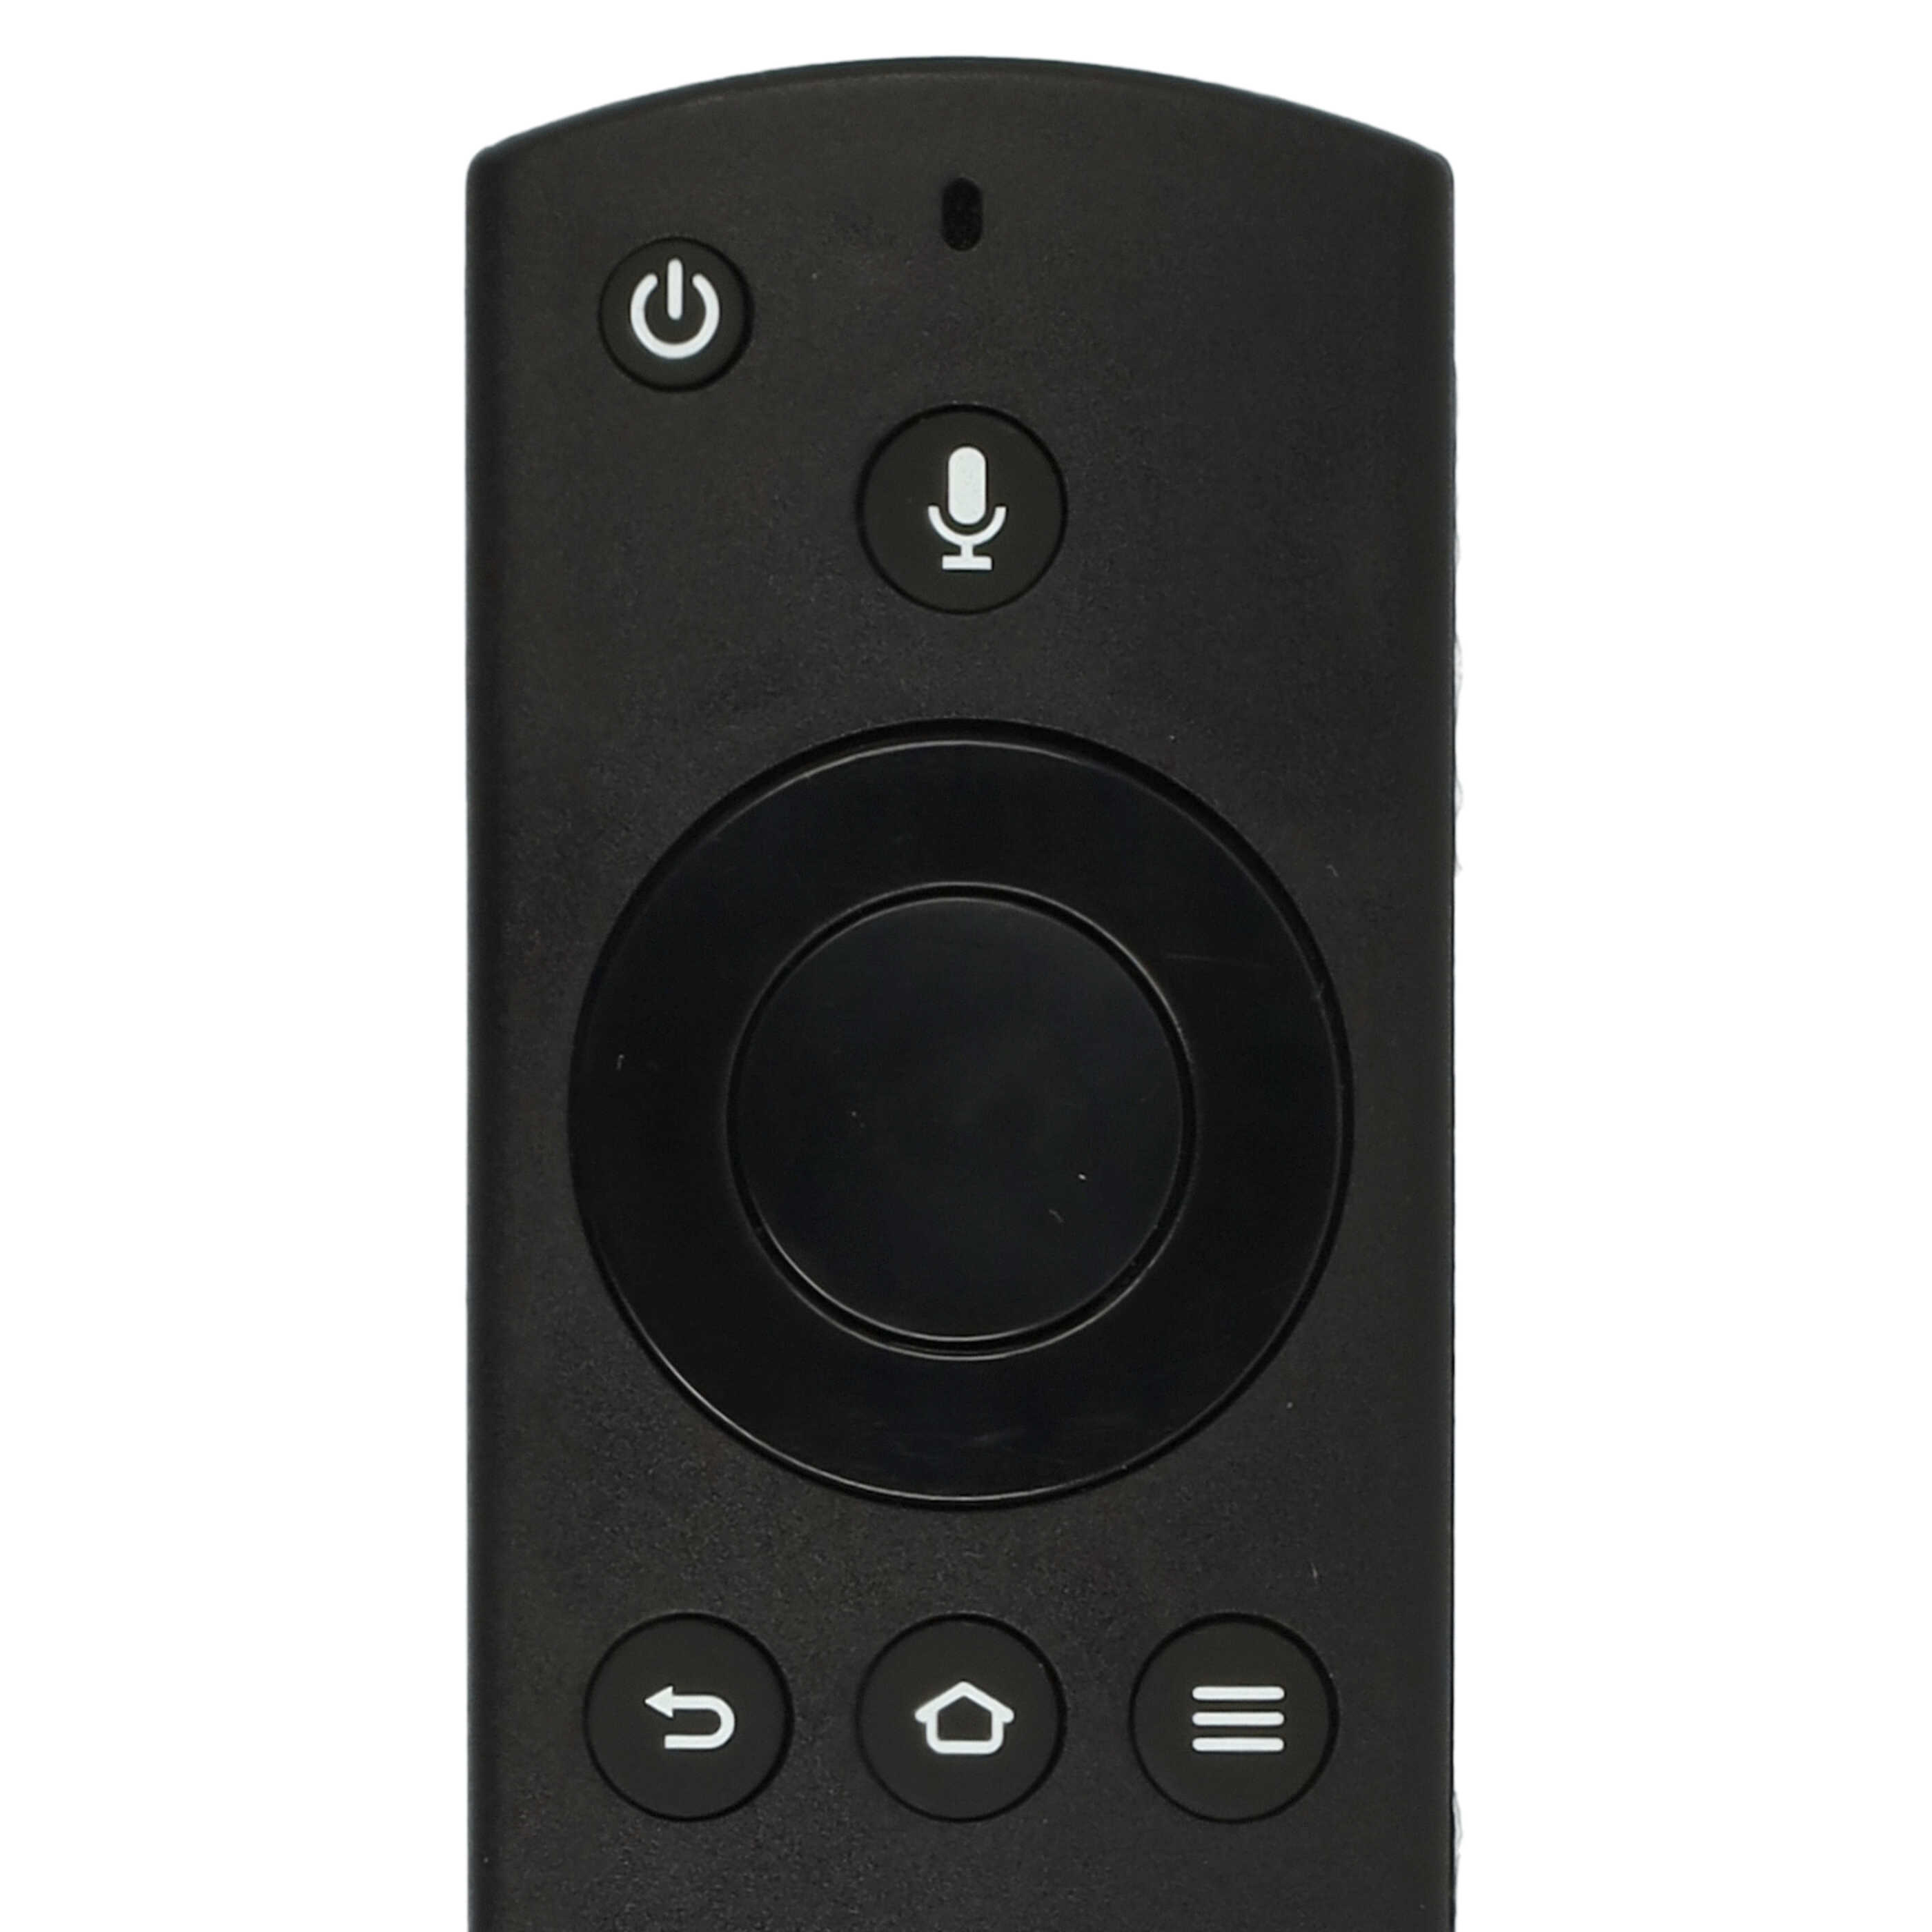 Mando a distancia reemplaza Amazon L5B83H para Streaming Box, Internet-TV Box Amazon